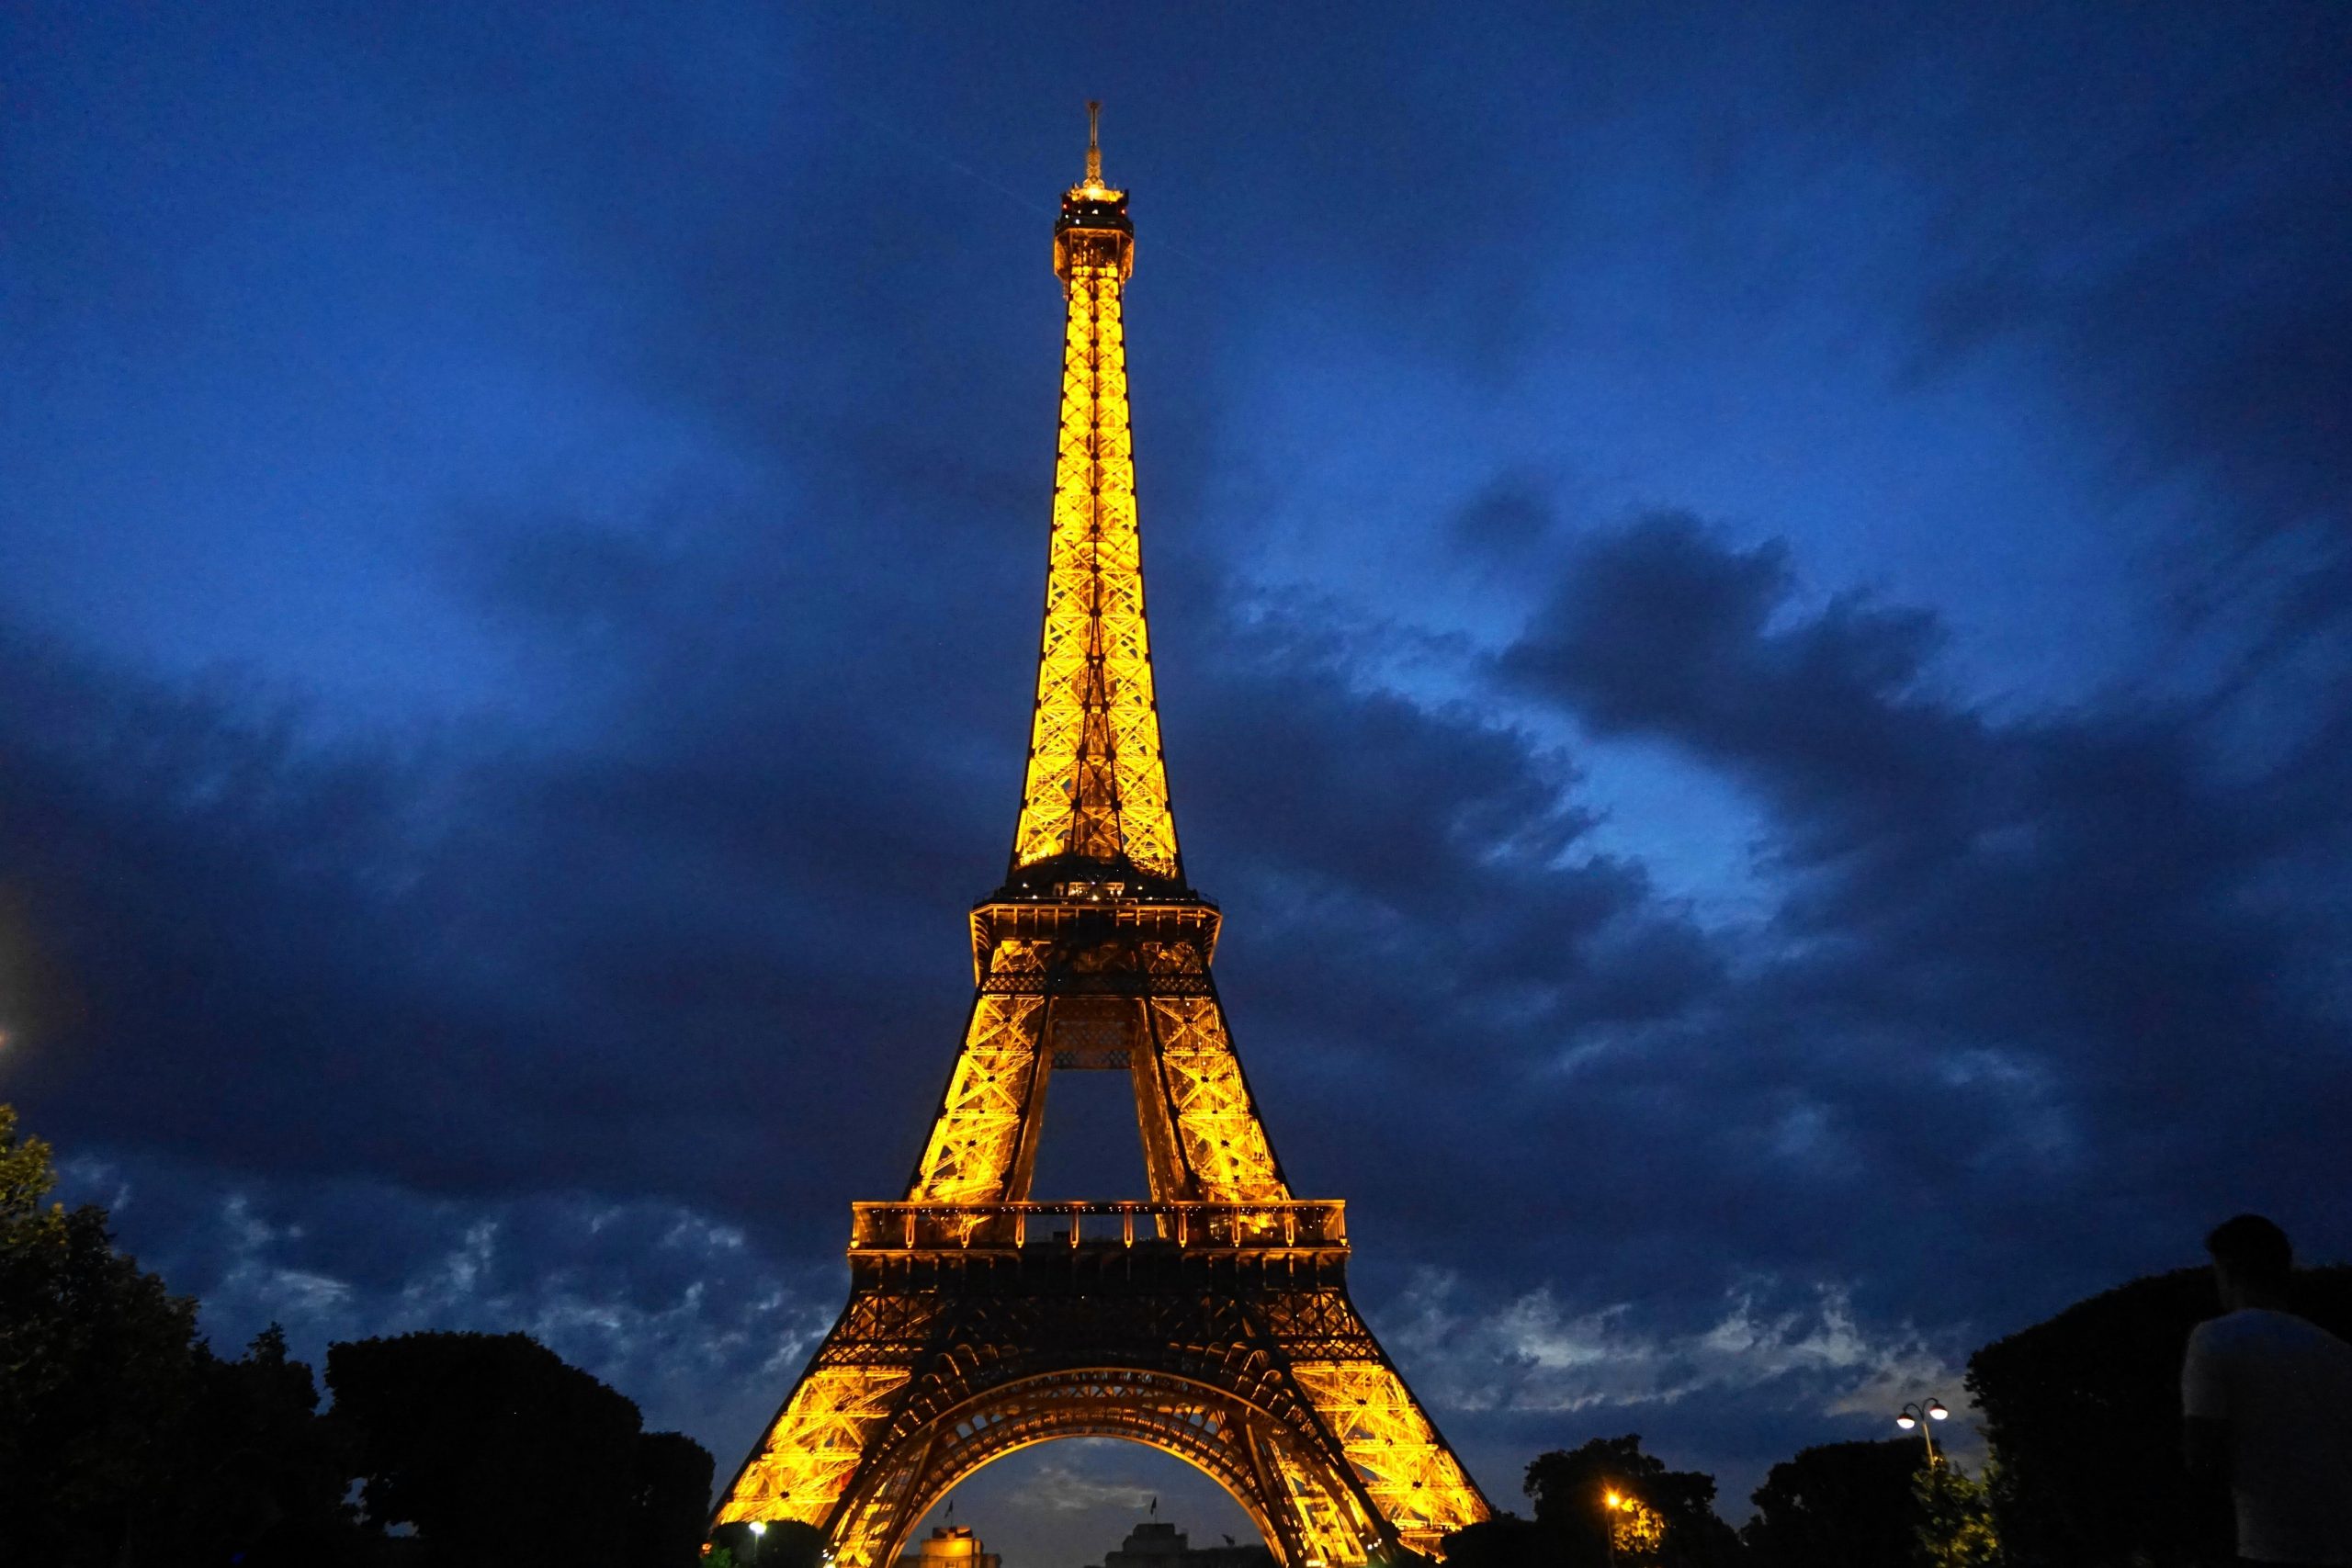 Eiffel Tower light show at night